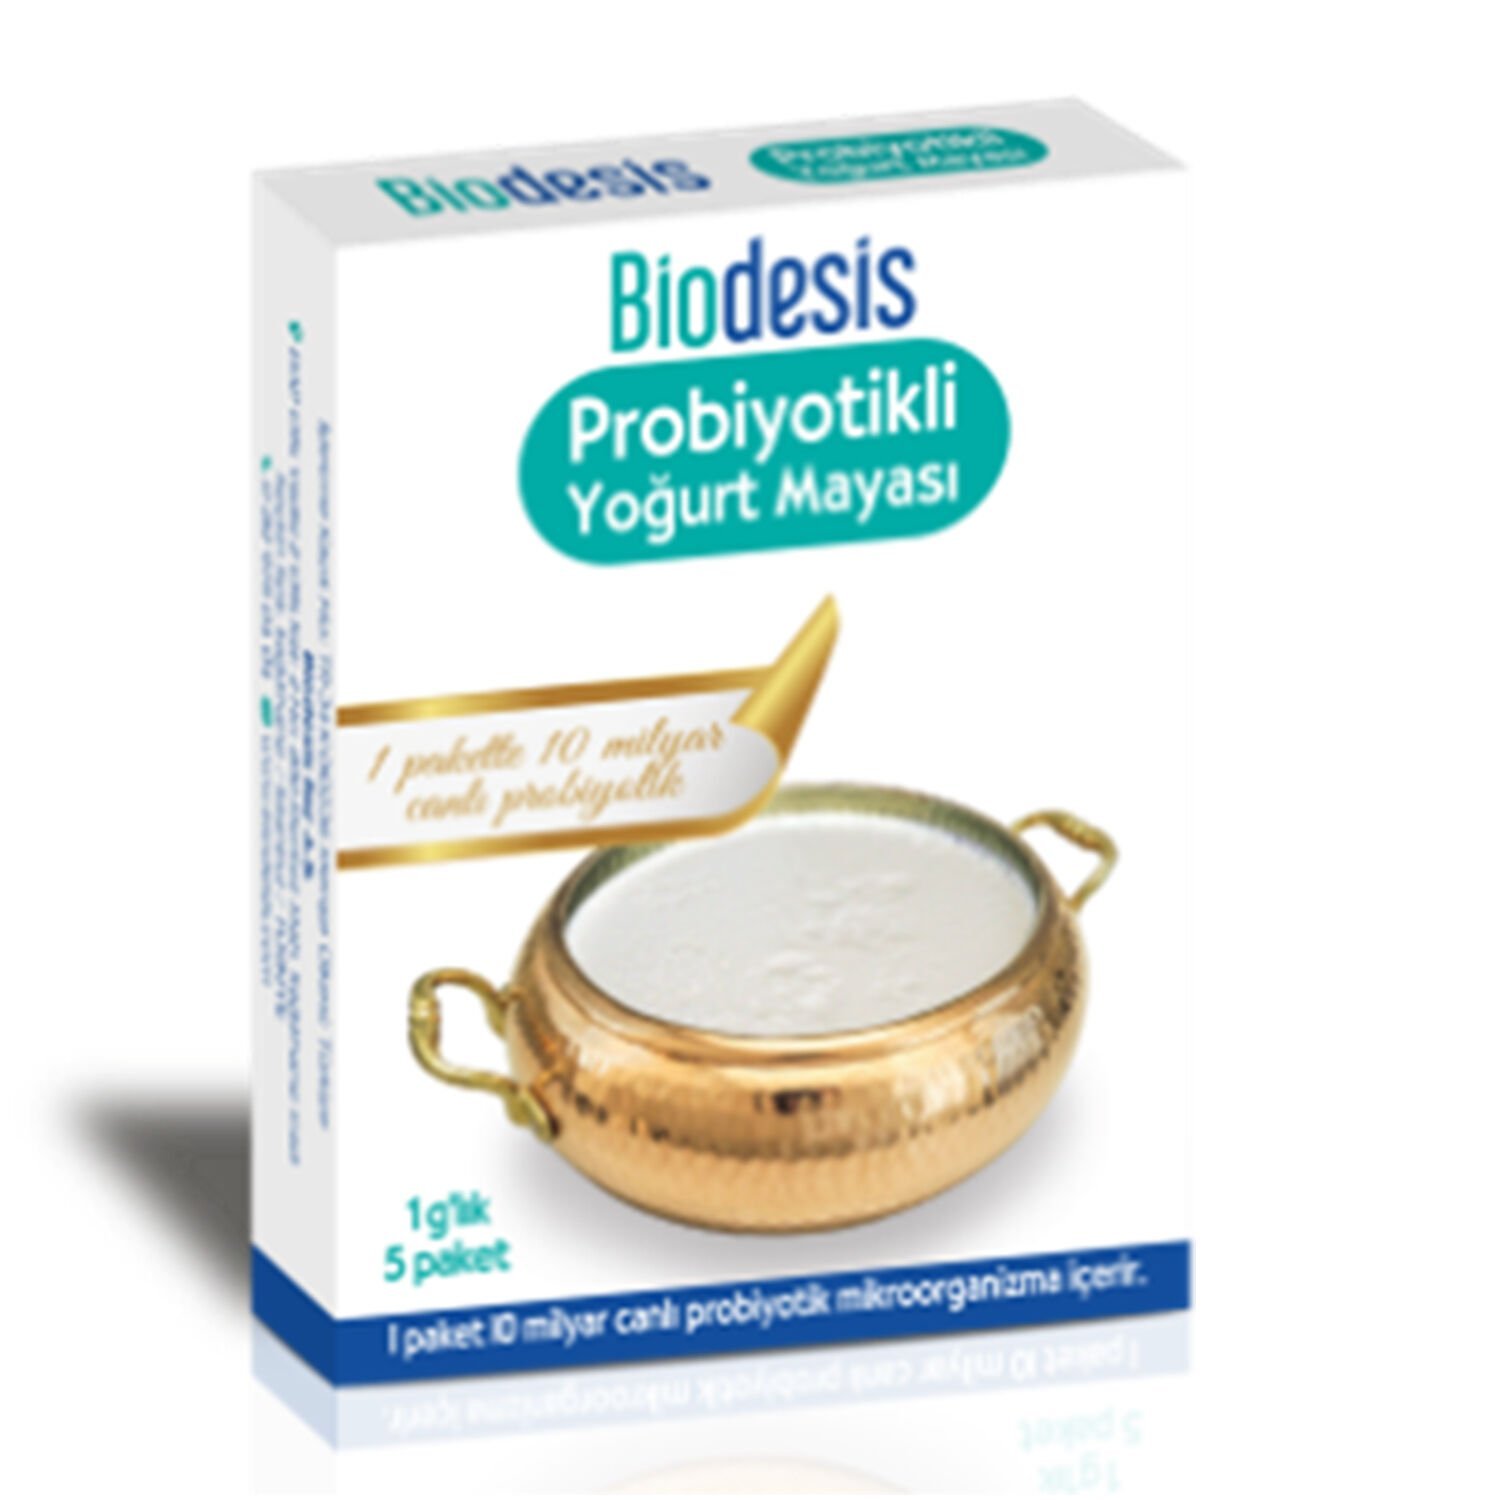 Biodesis Probiyotikli Yoğurt Mayası 1gr x 5 Paket